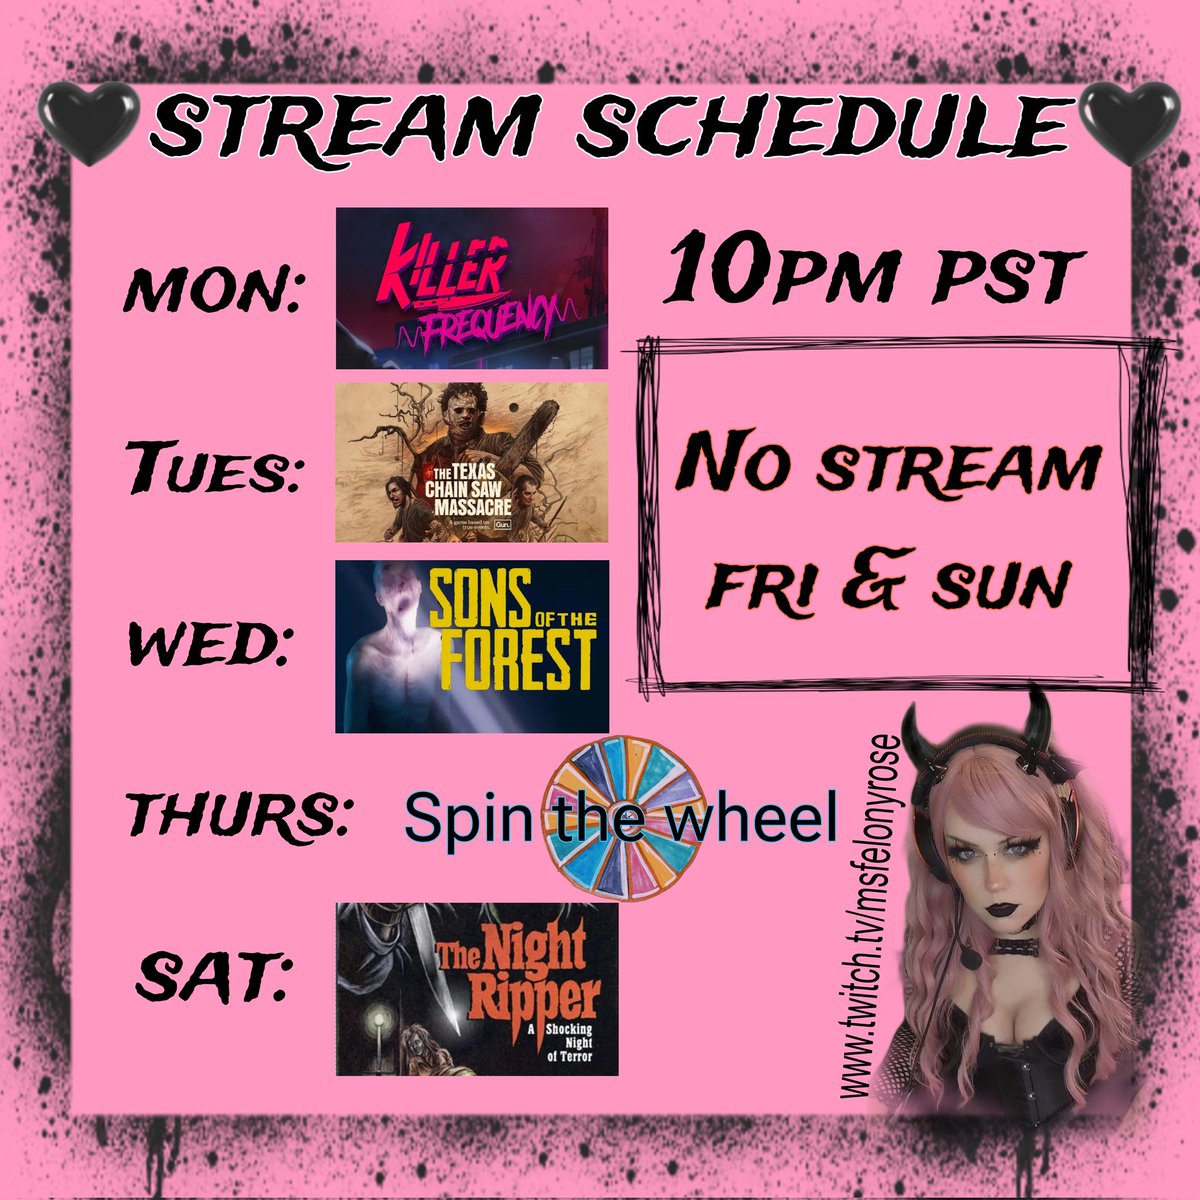 Hey spookiez! 
Schedule for this week(4/8-4/14)
#horror #gaming #horrorgames #indiehorrorgame #indiegames #streaming #livestream #smallstreamer #killerfrequency #TexasChainsawGame #sonsoftheforest #nightripper #puppetcombo #steam #steamgames #goth #gothgirls #spooky #cute #girls